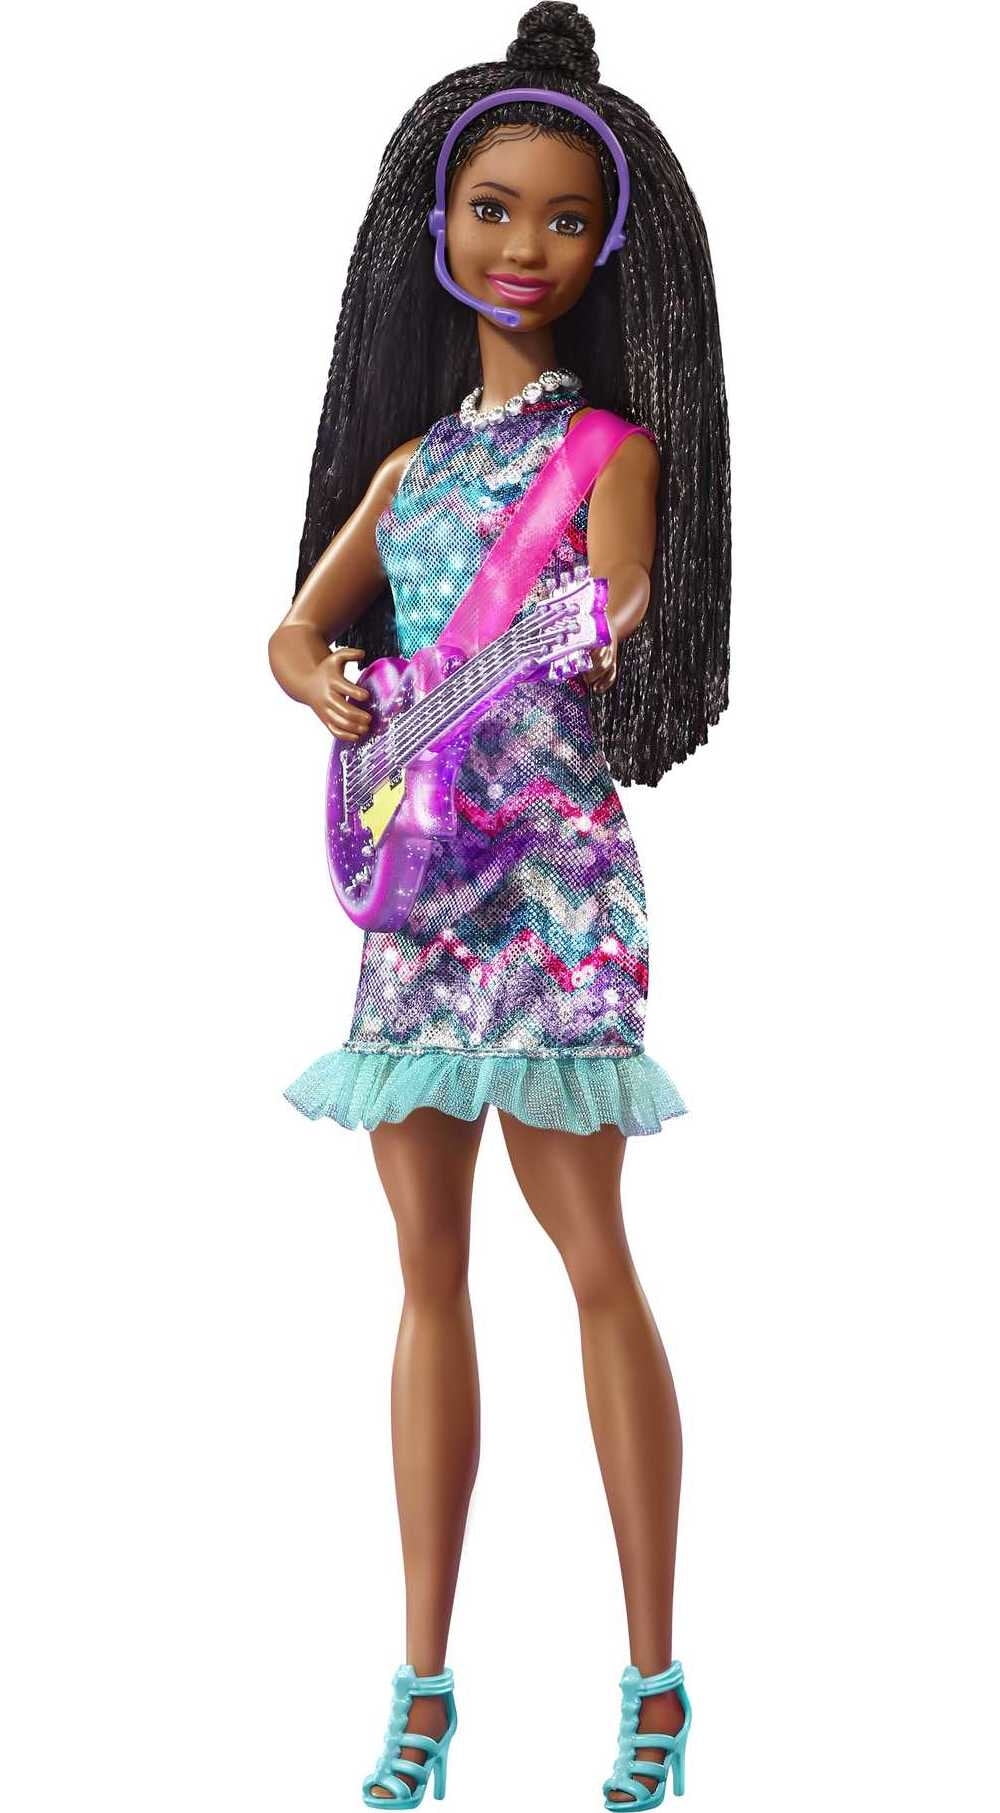 No doll. Pre-order Barbie's  my size 28 inch rainbow sparkly  DRESS 